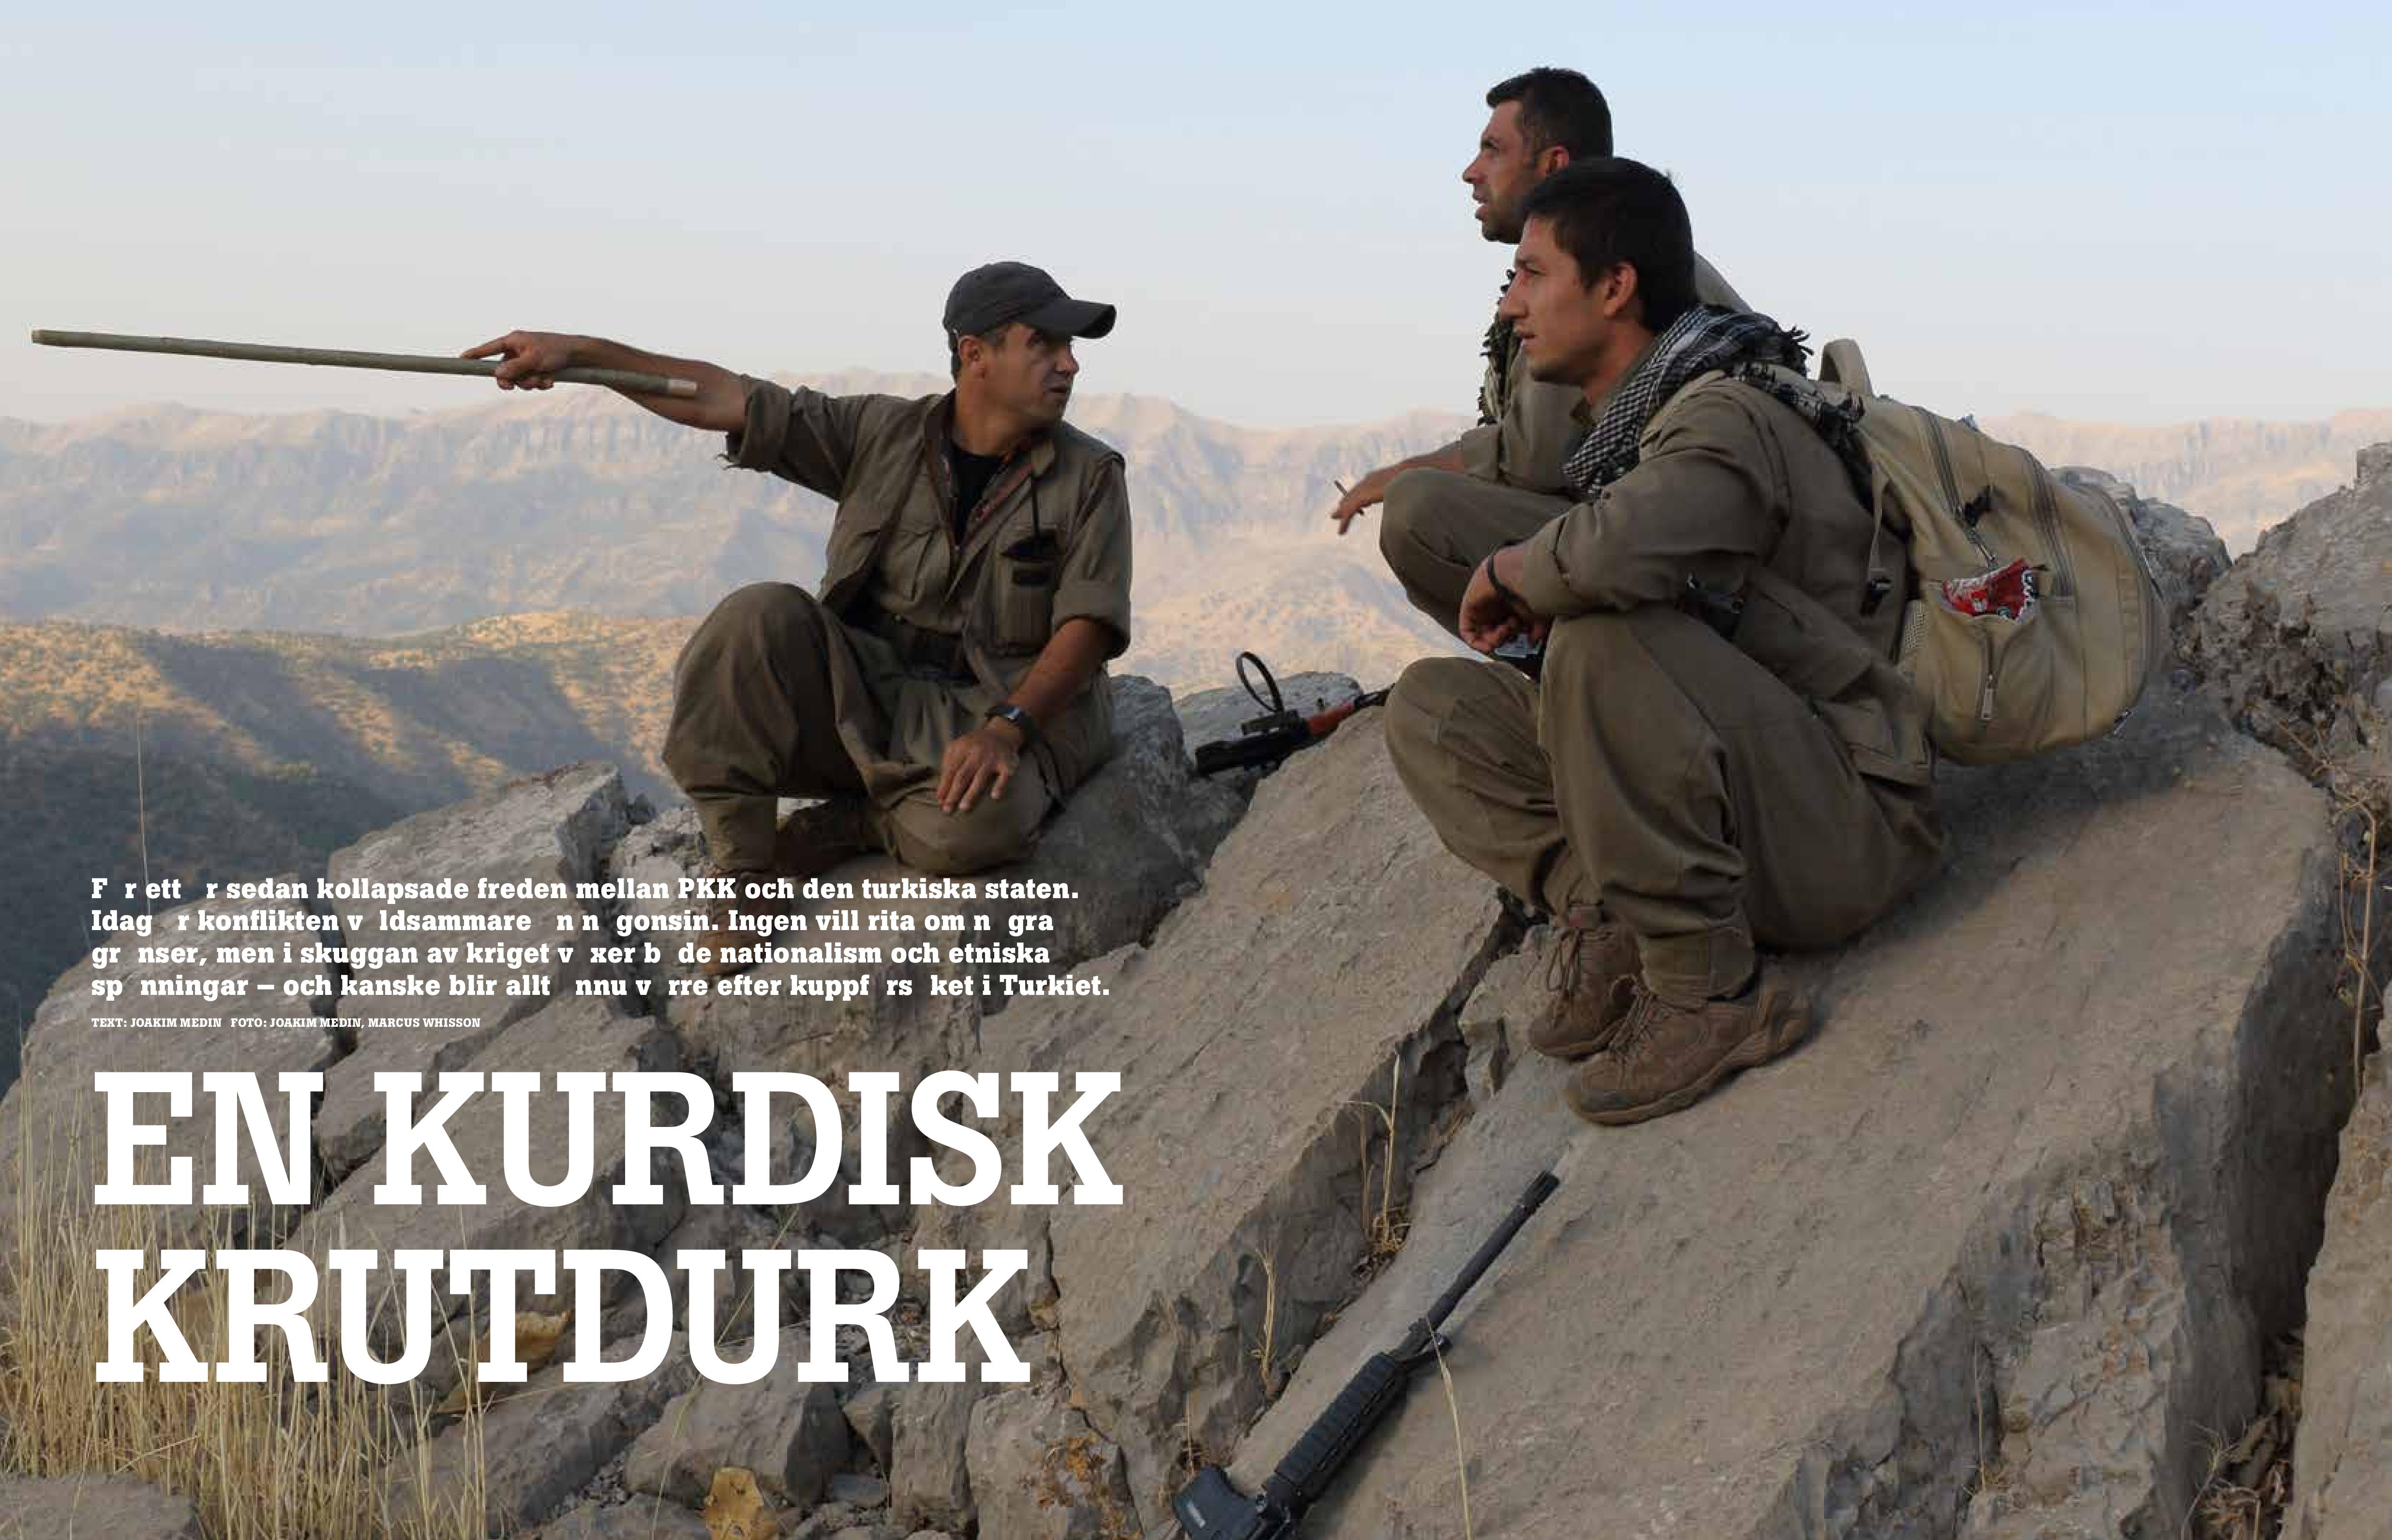 Kurdisk krutdurk, Frihet sep 2016